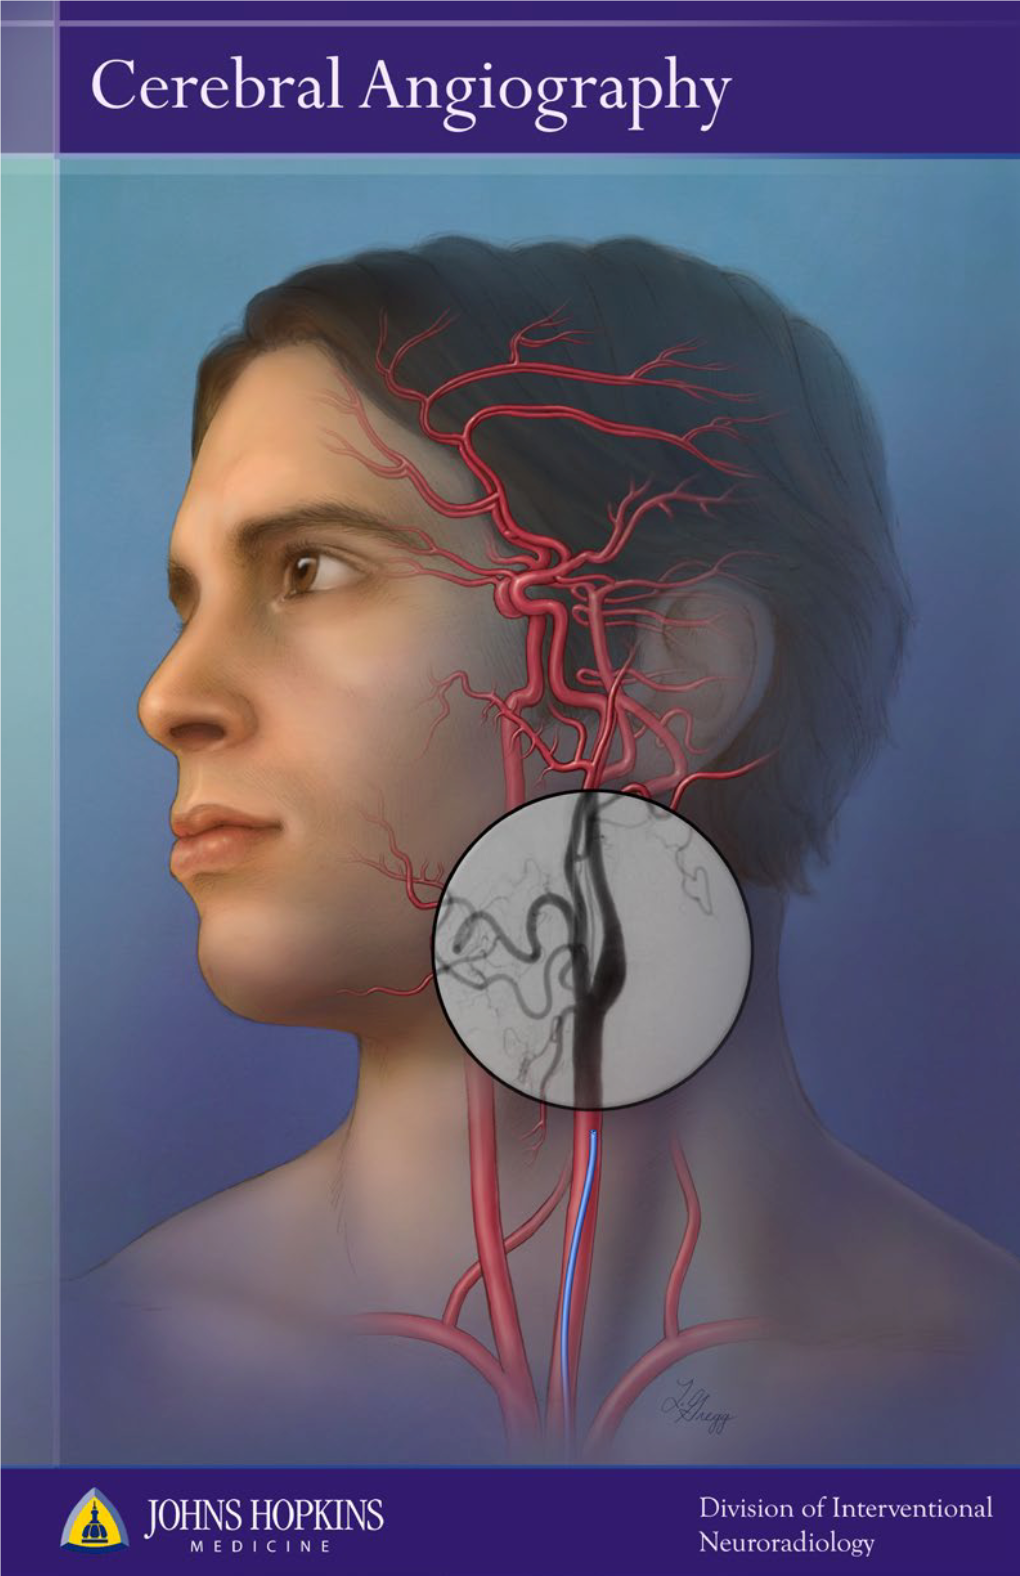 Cerebral-Angiography-Johns-Hopkins